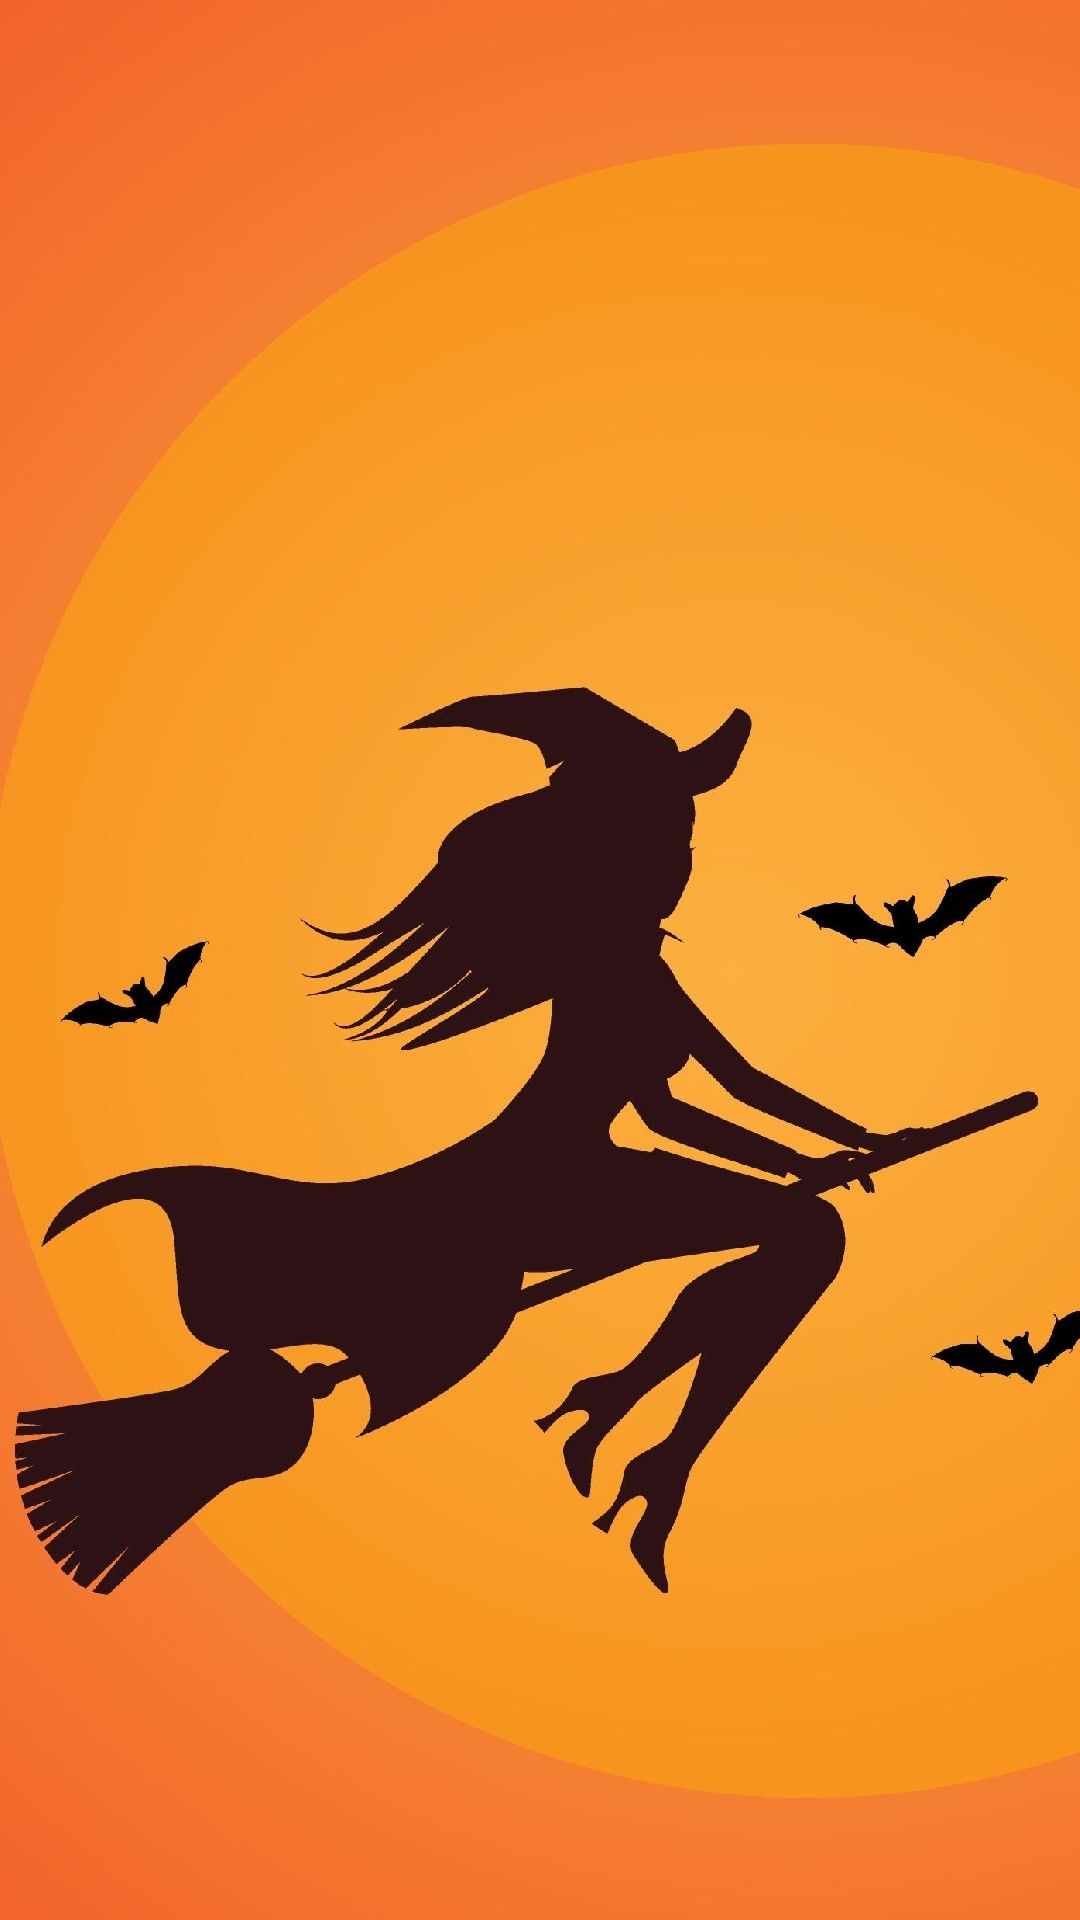 Free HD Halloween iPhone Wallpaper Background. Witch wallpaper, Halloween wallpaper background, Witchy wallpaper